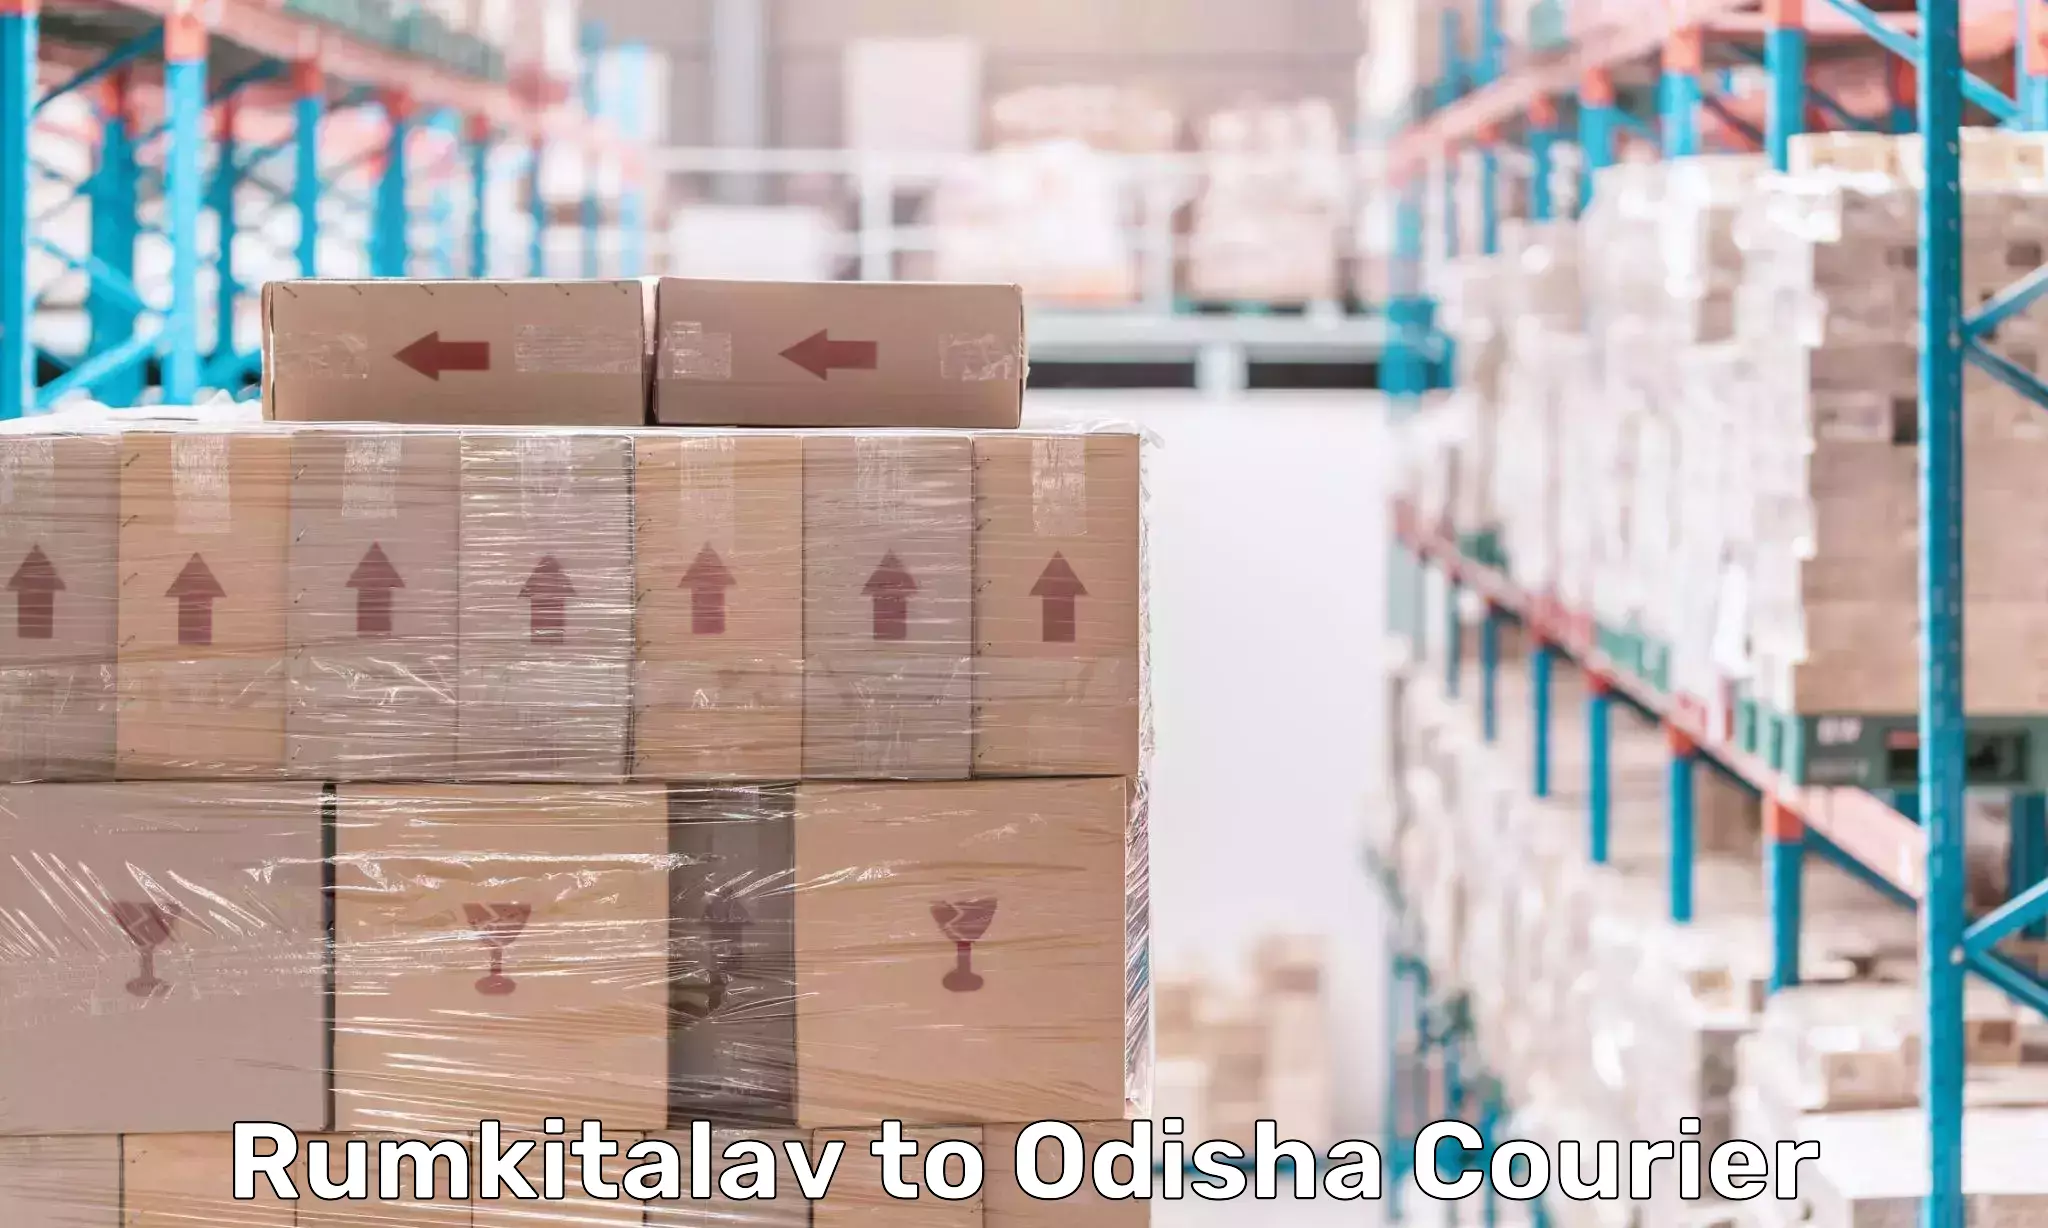 Comprehensive logistics solutions Rumkitalav to Odisha